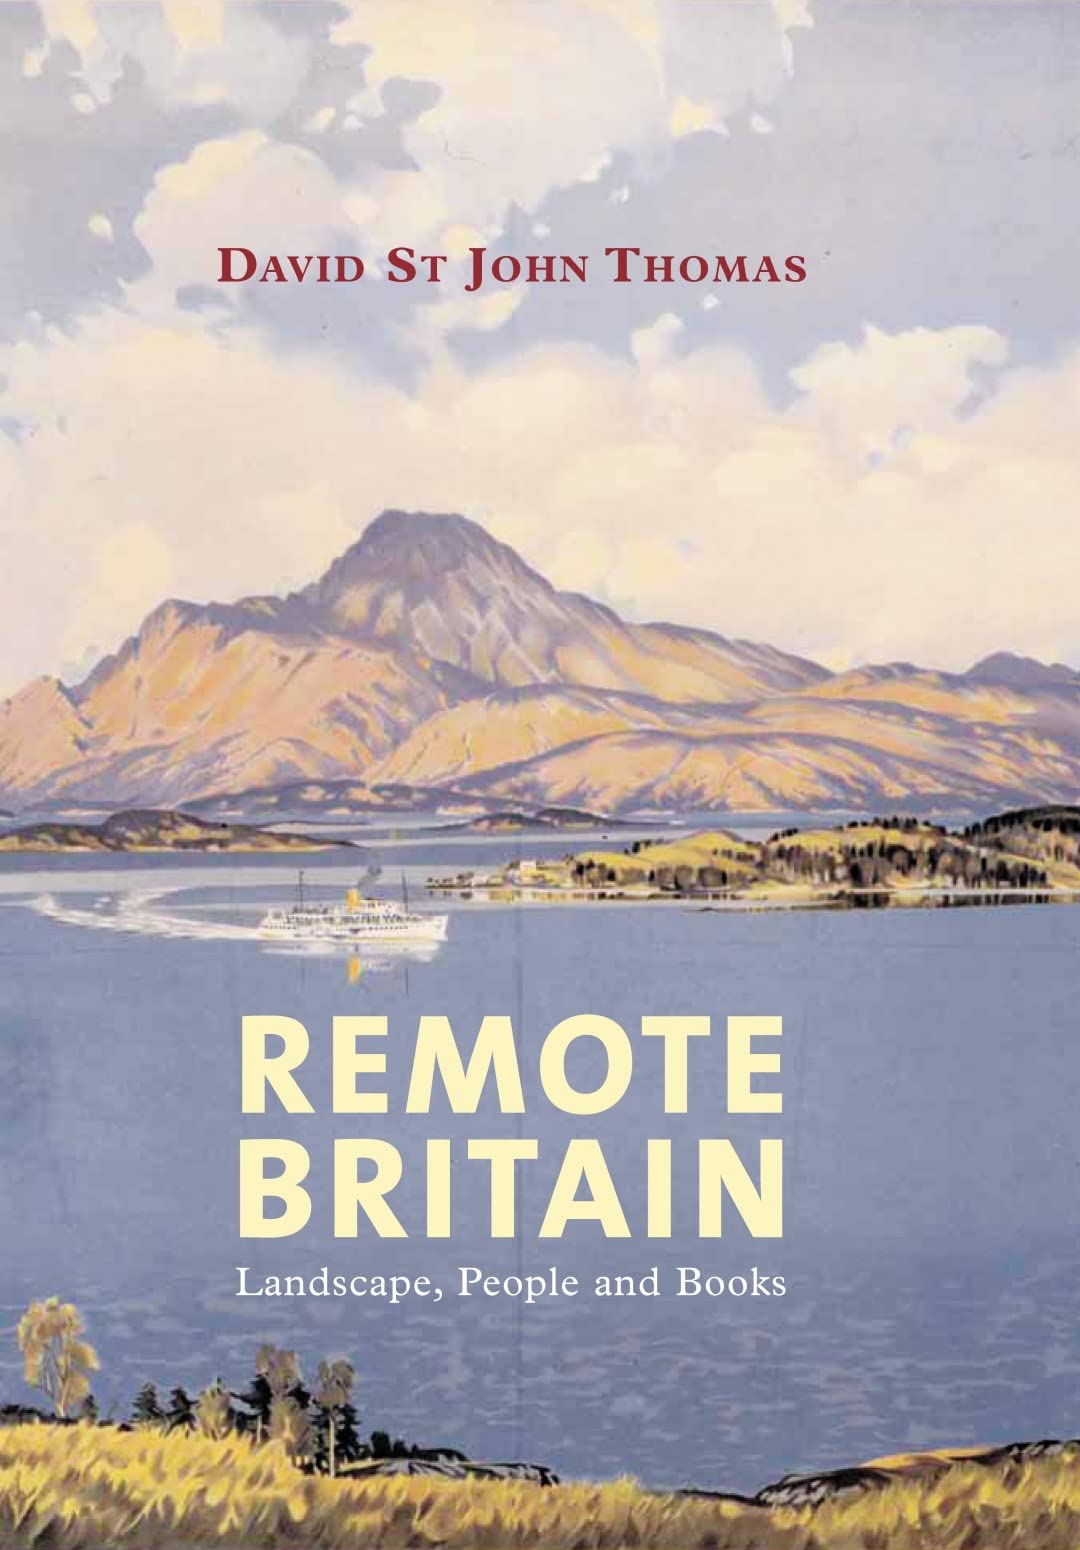 Remote Britain: Landscape, People and Books